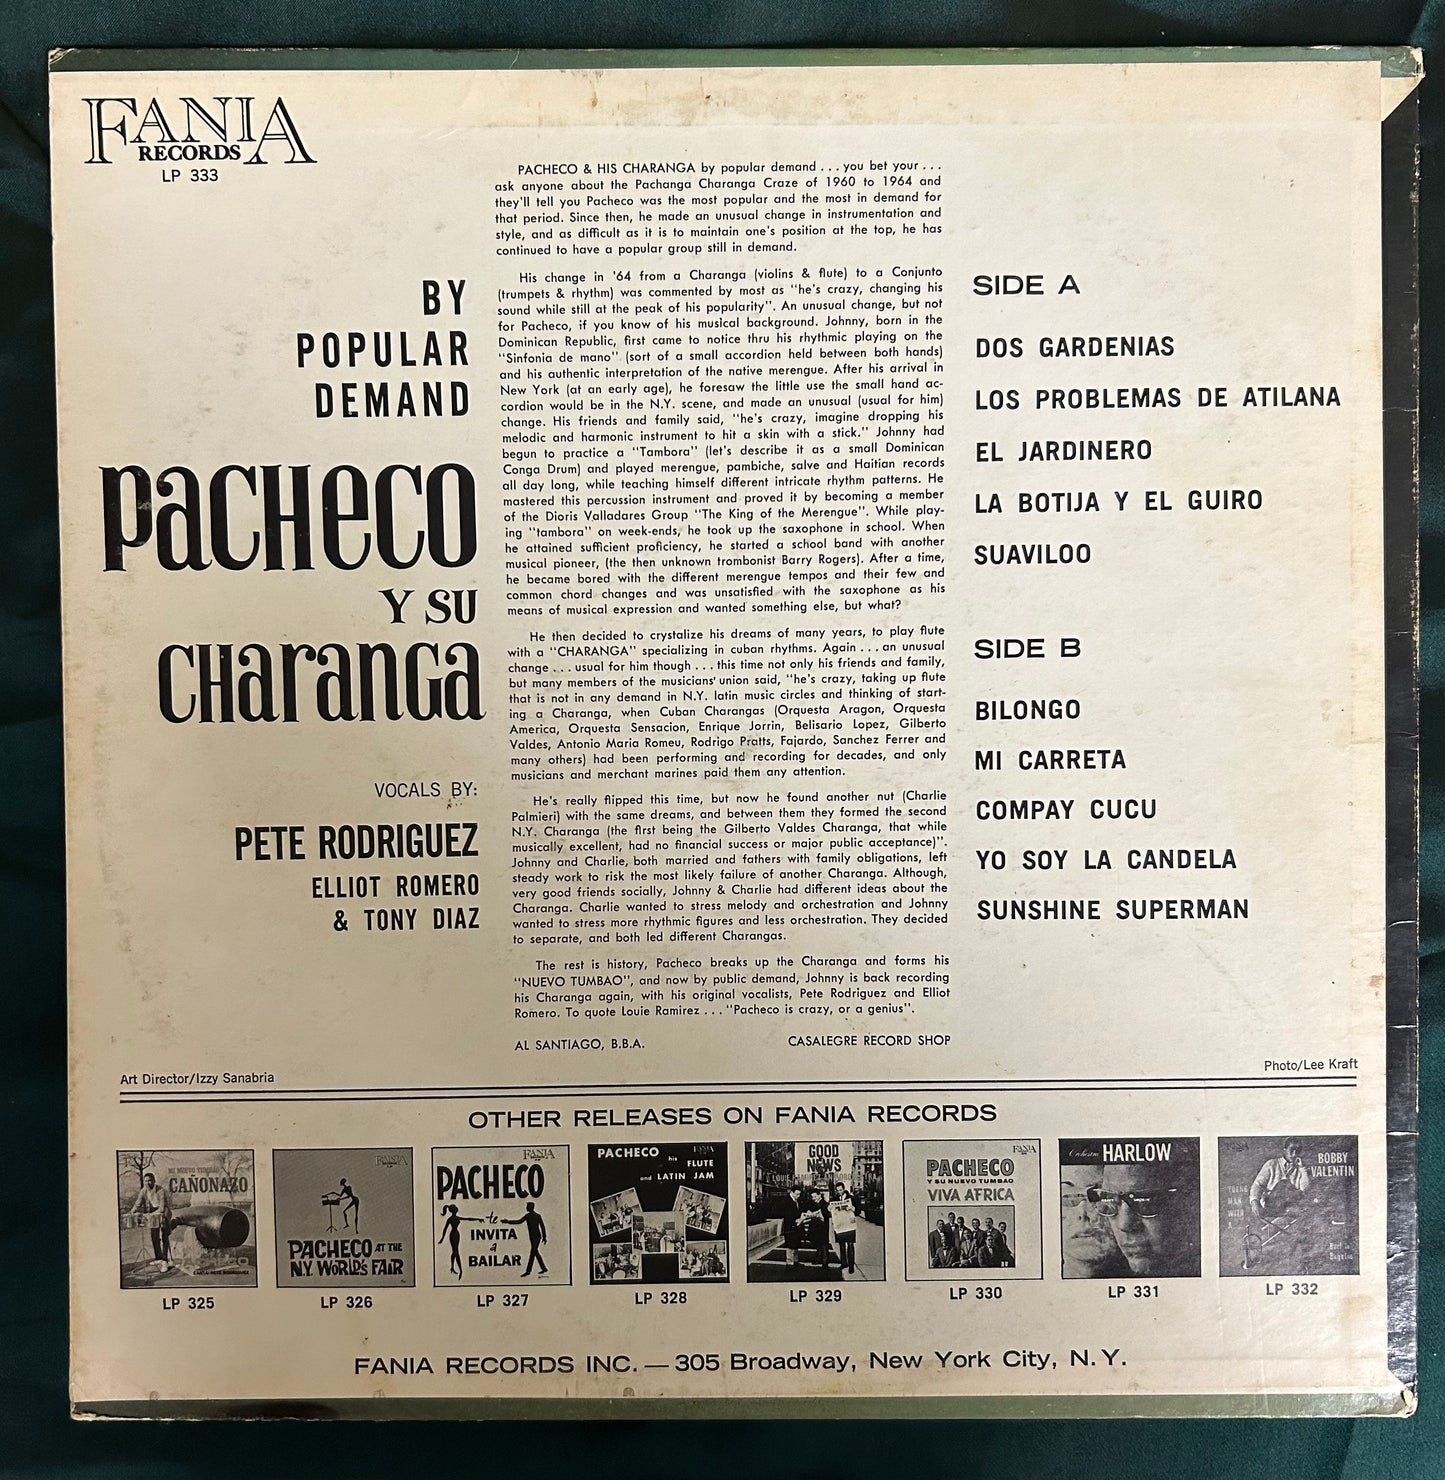 Johnny Pacheco y Su Charanga - By Popular Demand 1st Mono Press 1966 Fania